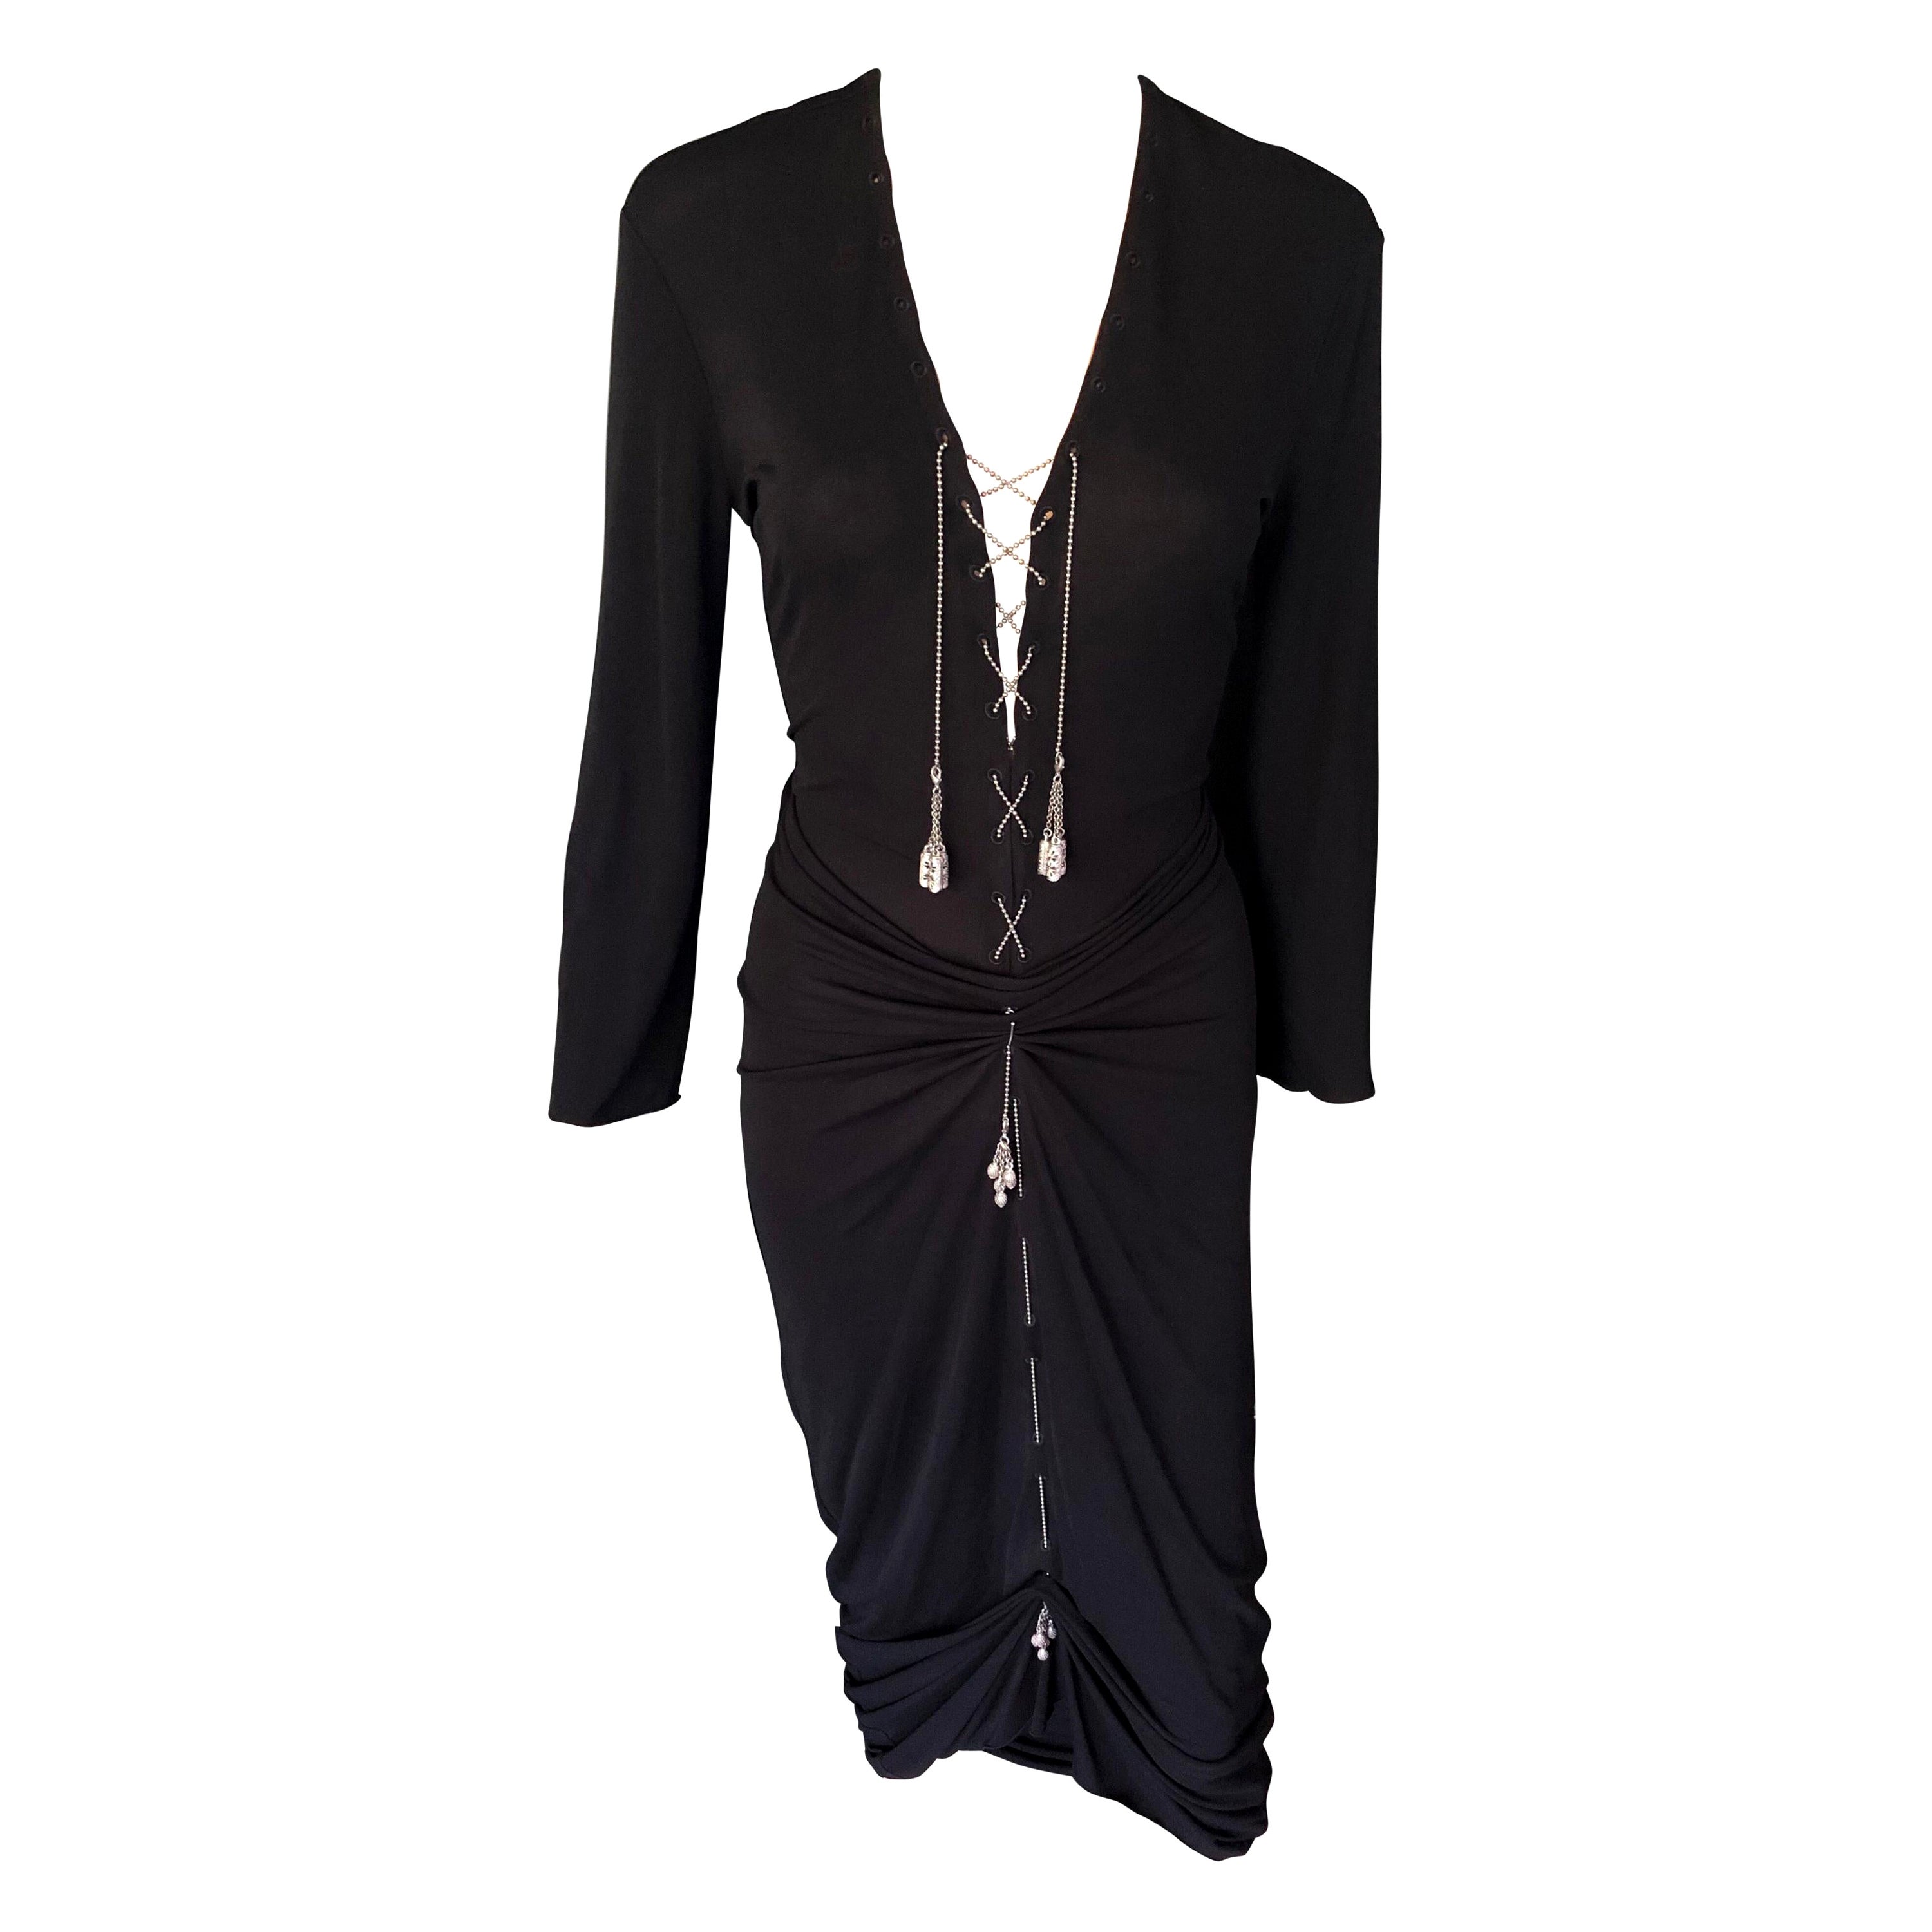  1990's Jean Paul Gaultier Knit Semi-Sheer Chain Embellished Black Dress For Sale